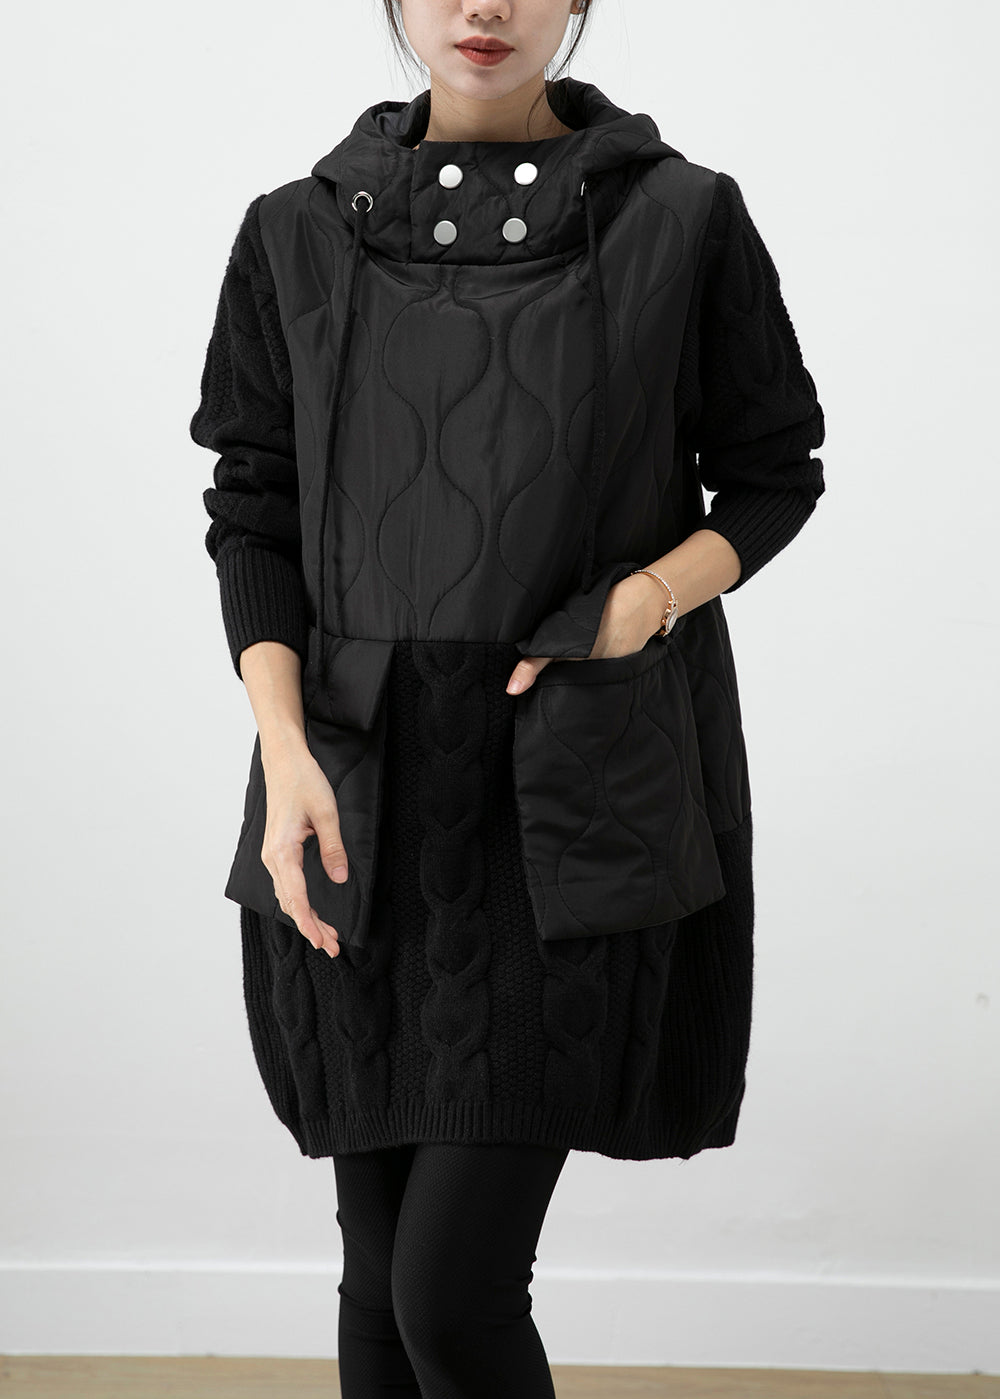 Handmade Black Hooded Knit Patchwork Warm Fleece Pullover Sweatshirt Dress Winter